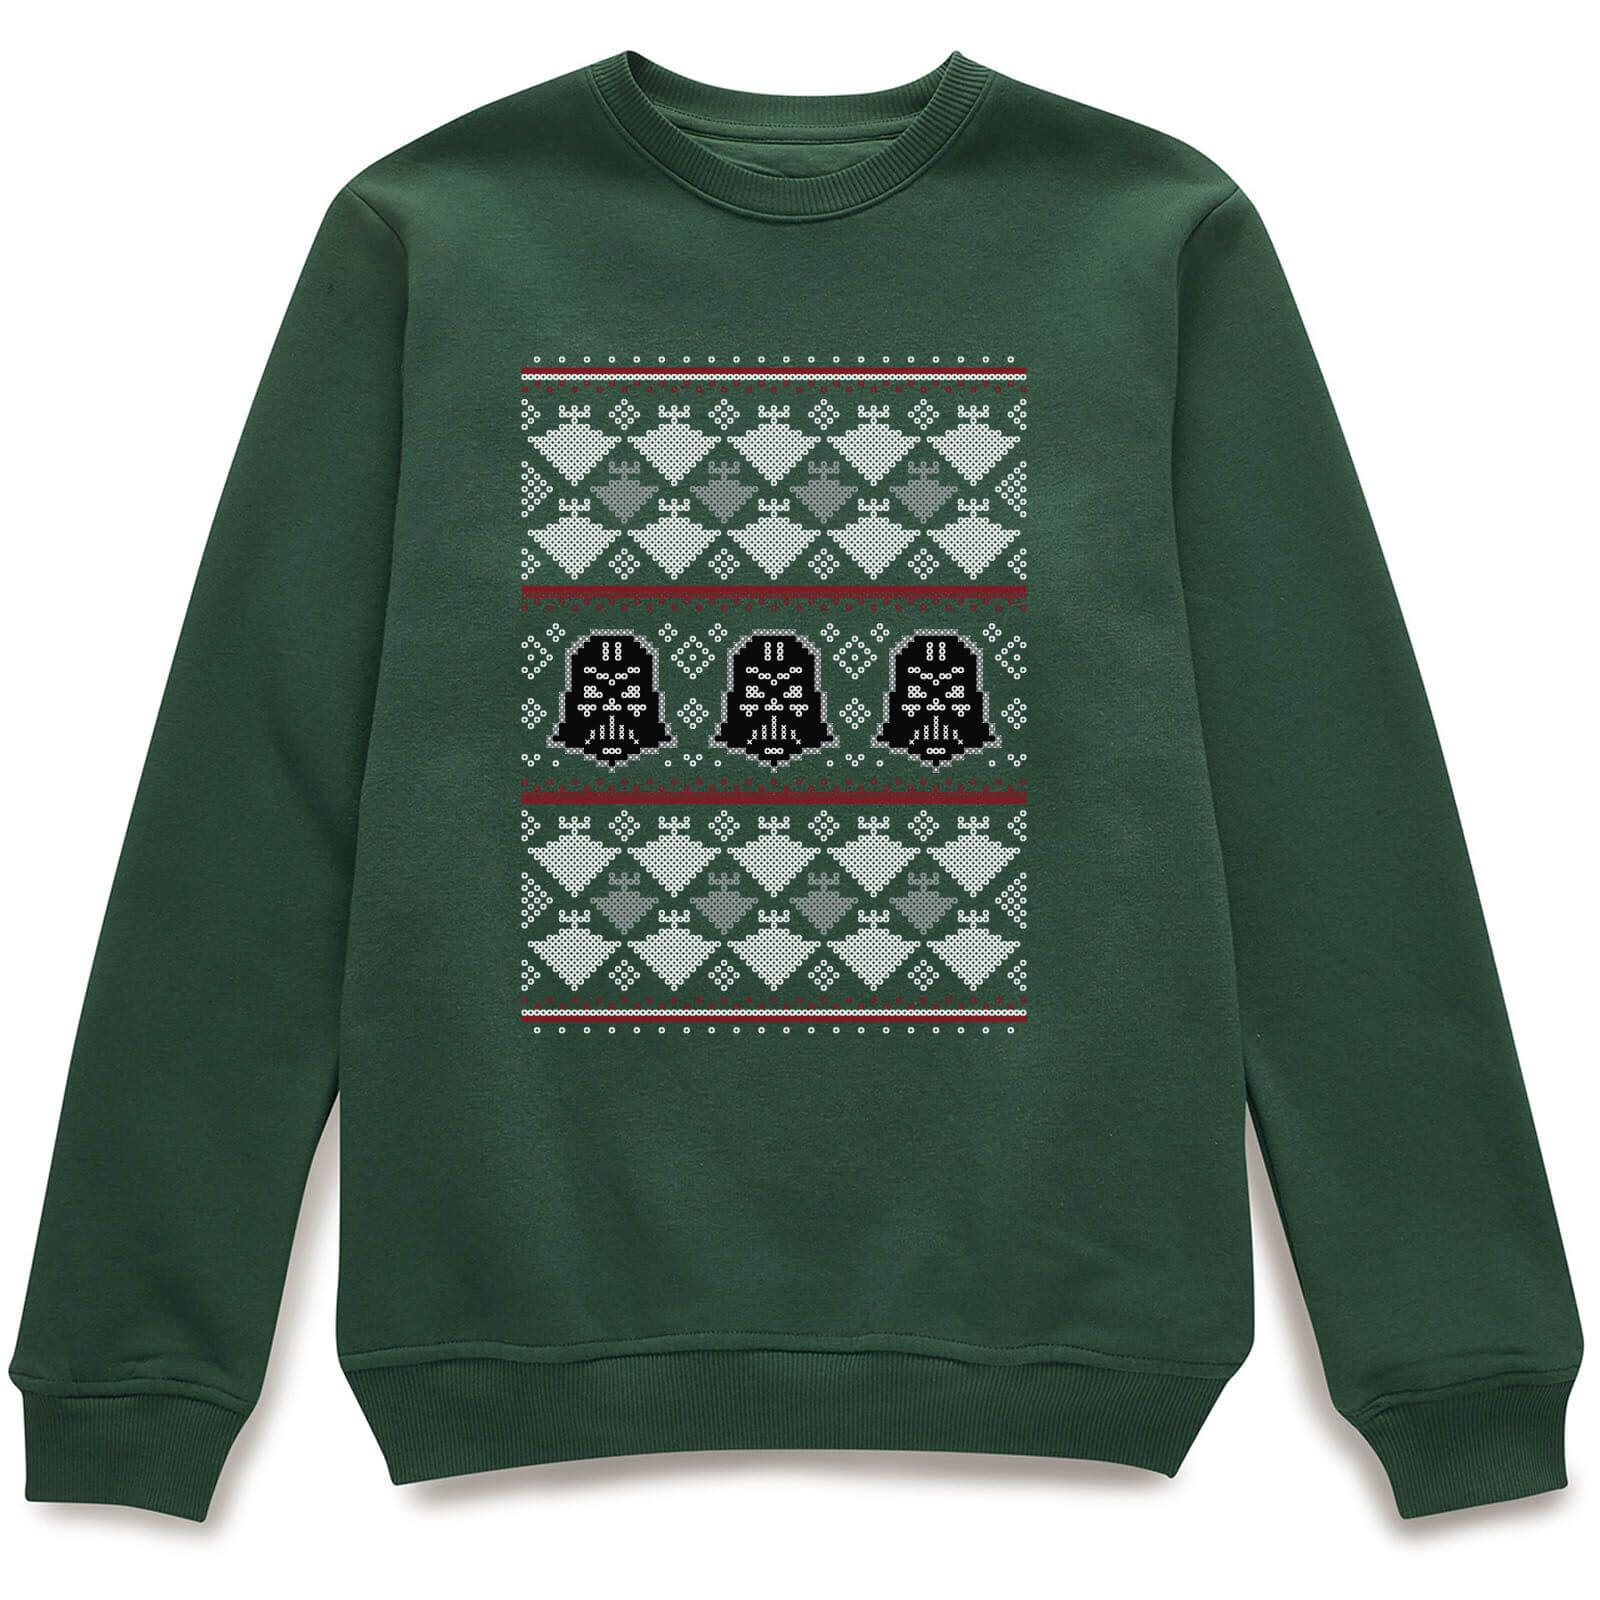 Star Wars Christmas Darth Vader Imperial Starship Knit Green Christmas Sweatshirt - XXL